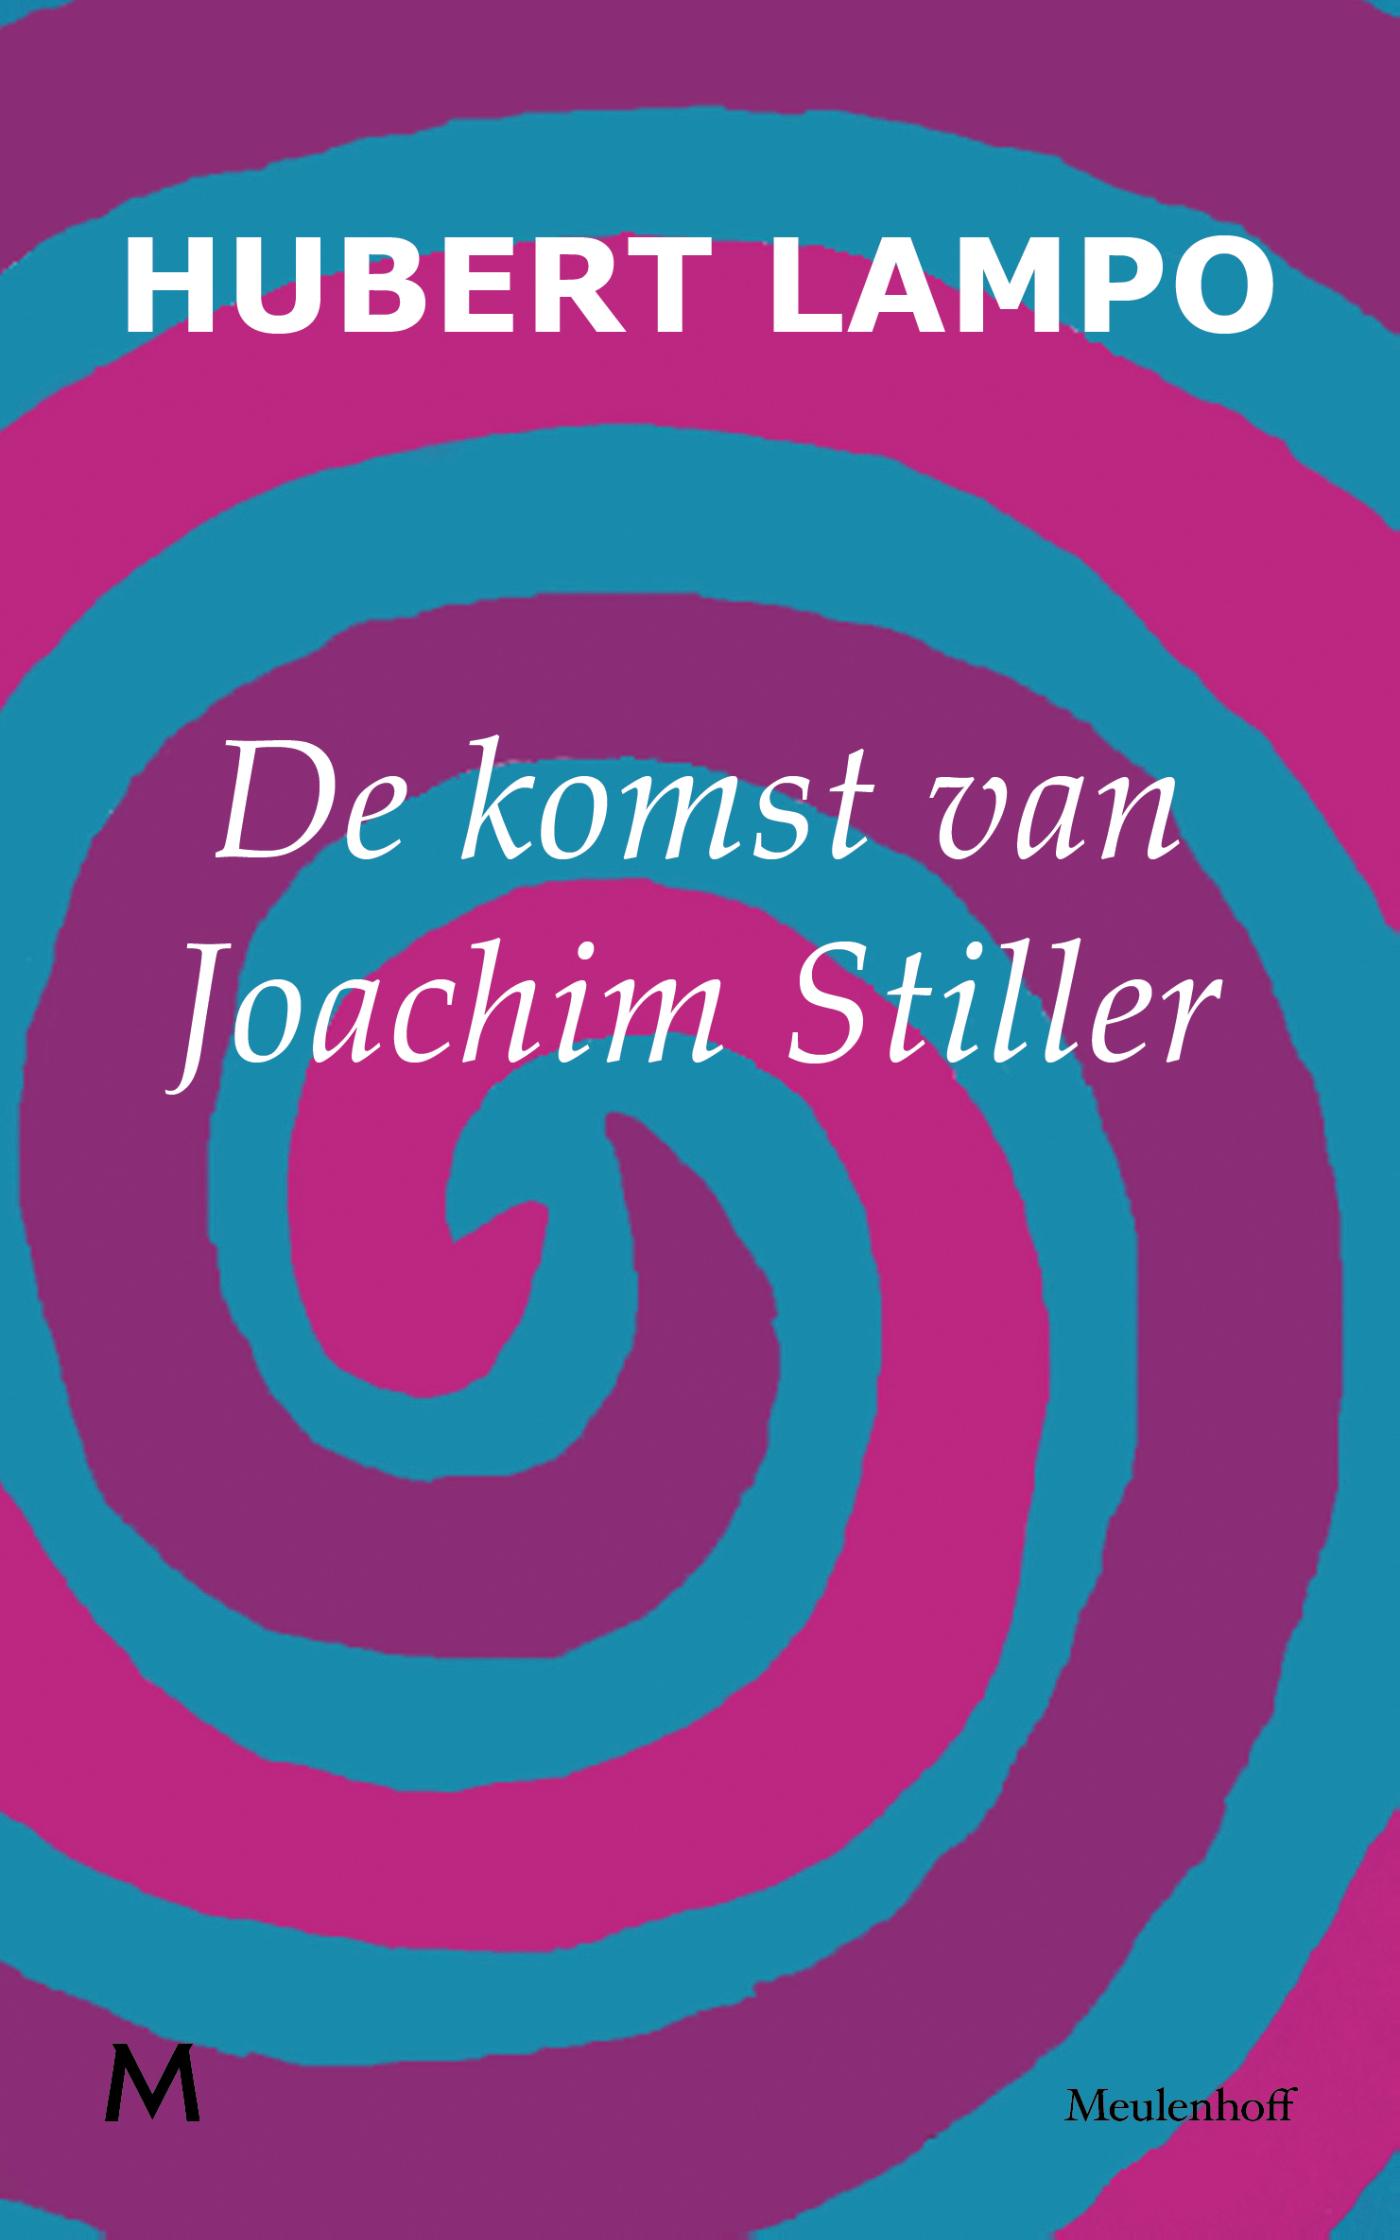 De komst van Joachim Stiller (Ebook)